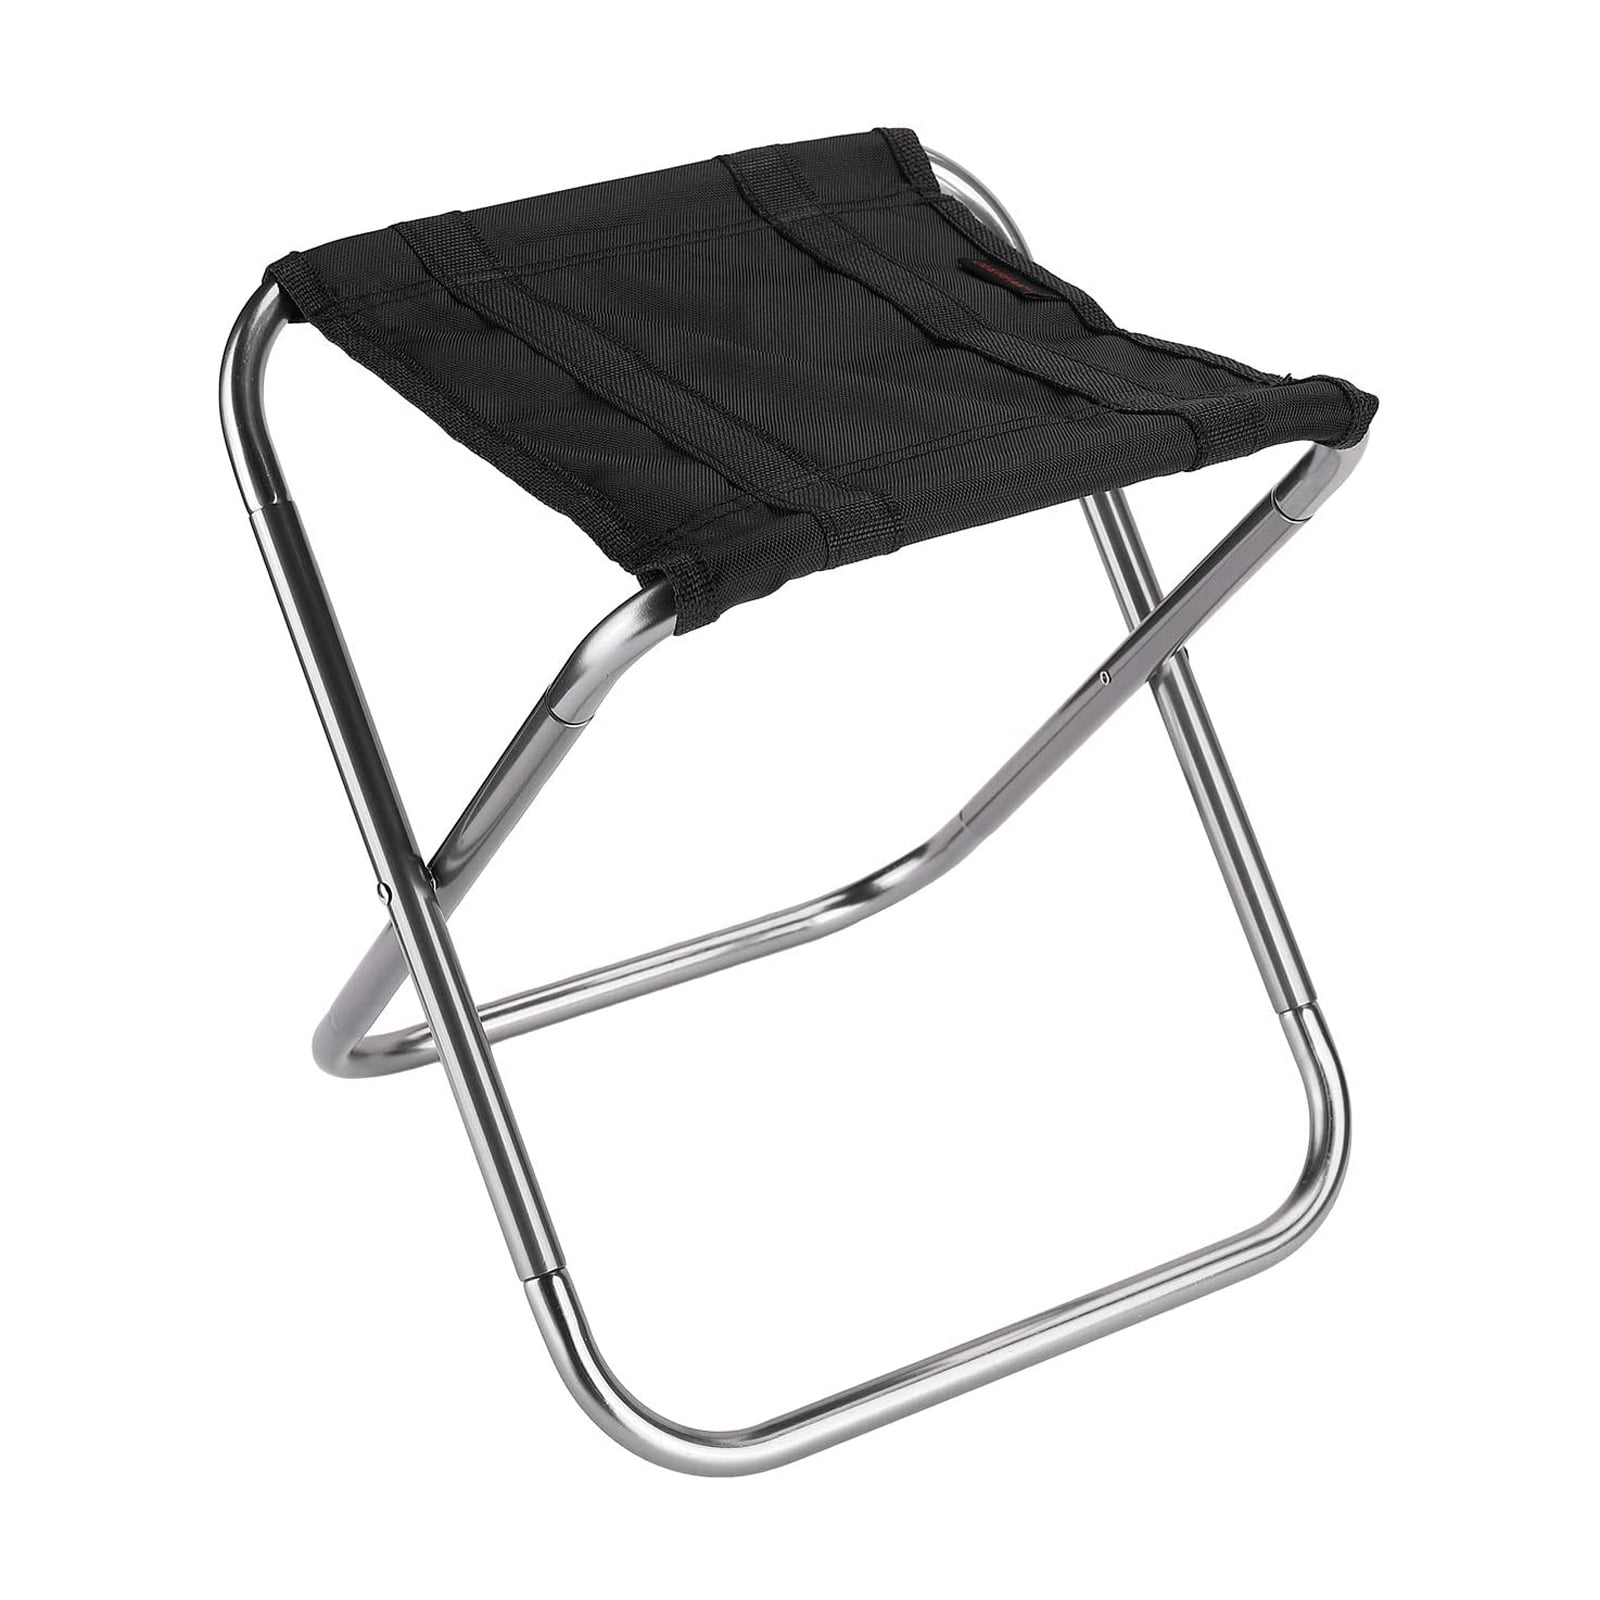 Portable Folding Low Camping Chair Outdoor Beach Picnic Lightweight Aluminum 